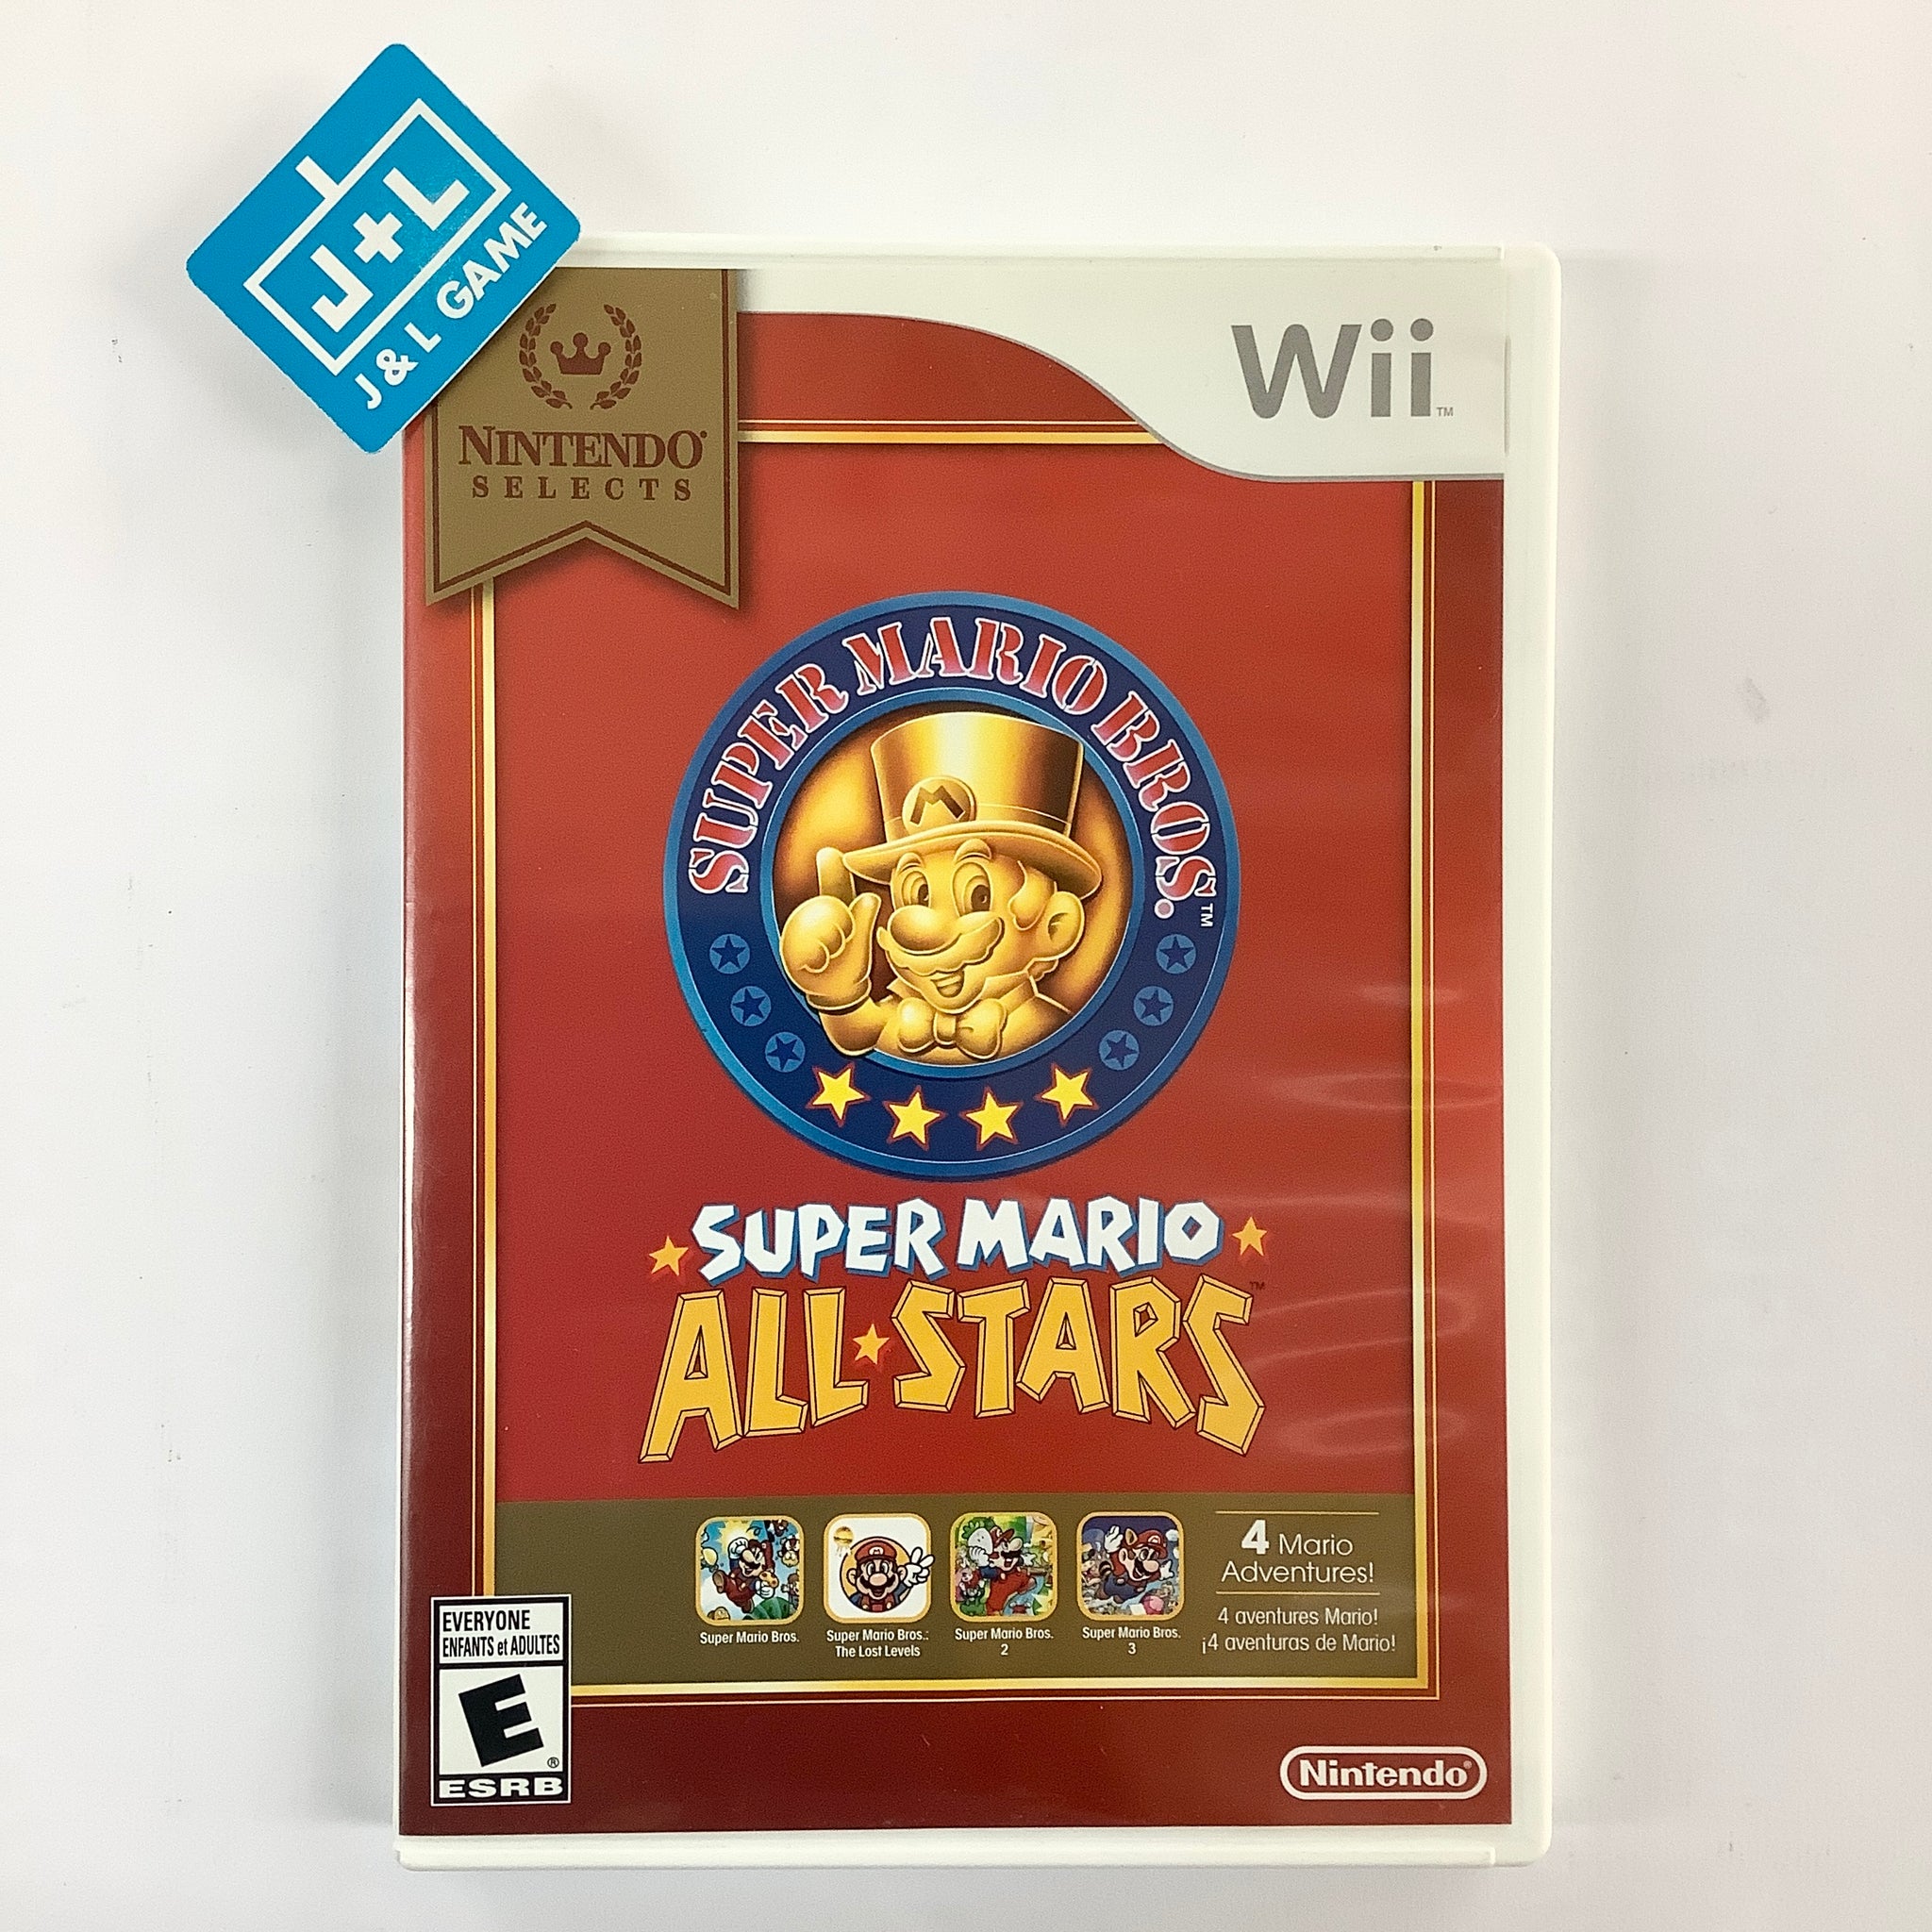 Jogo Nintendo Wii Selects - New Super Mario Bros